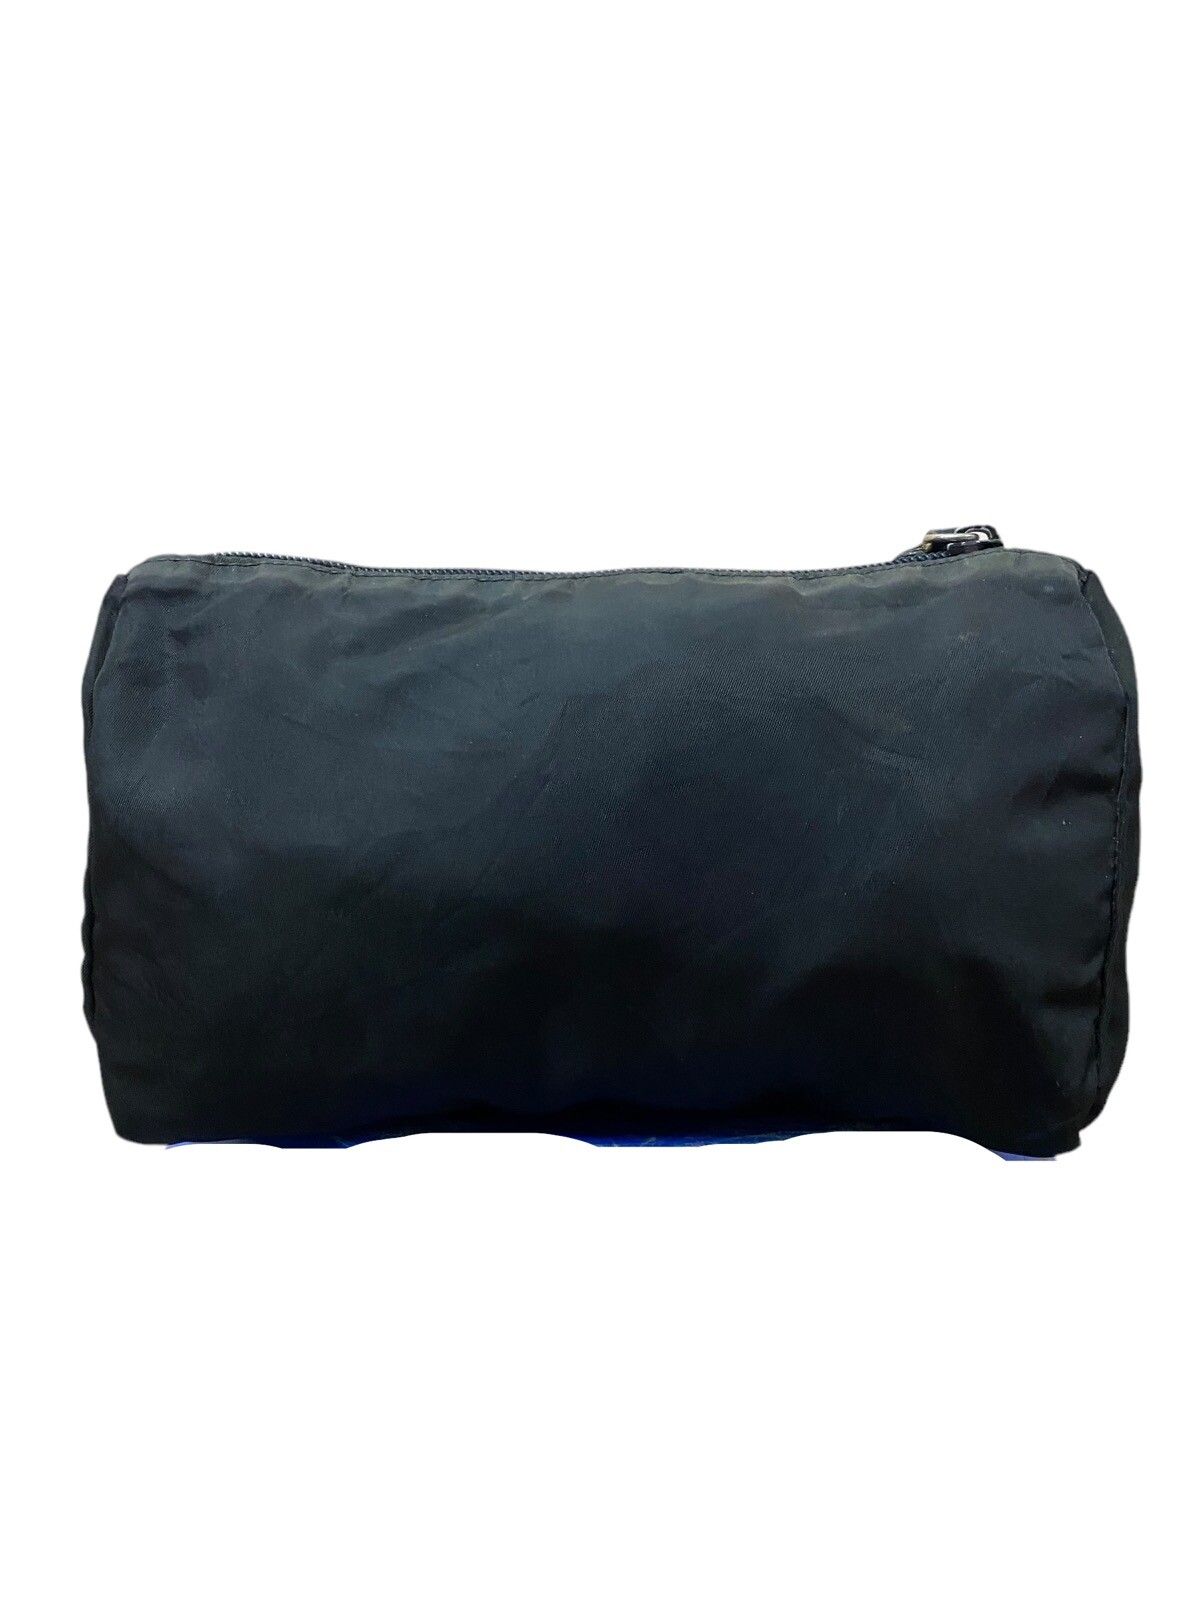 Authentic🌑Prada Clutch Bag Black Synthetic - 5